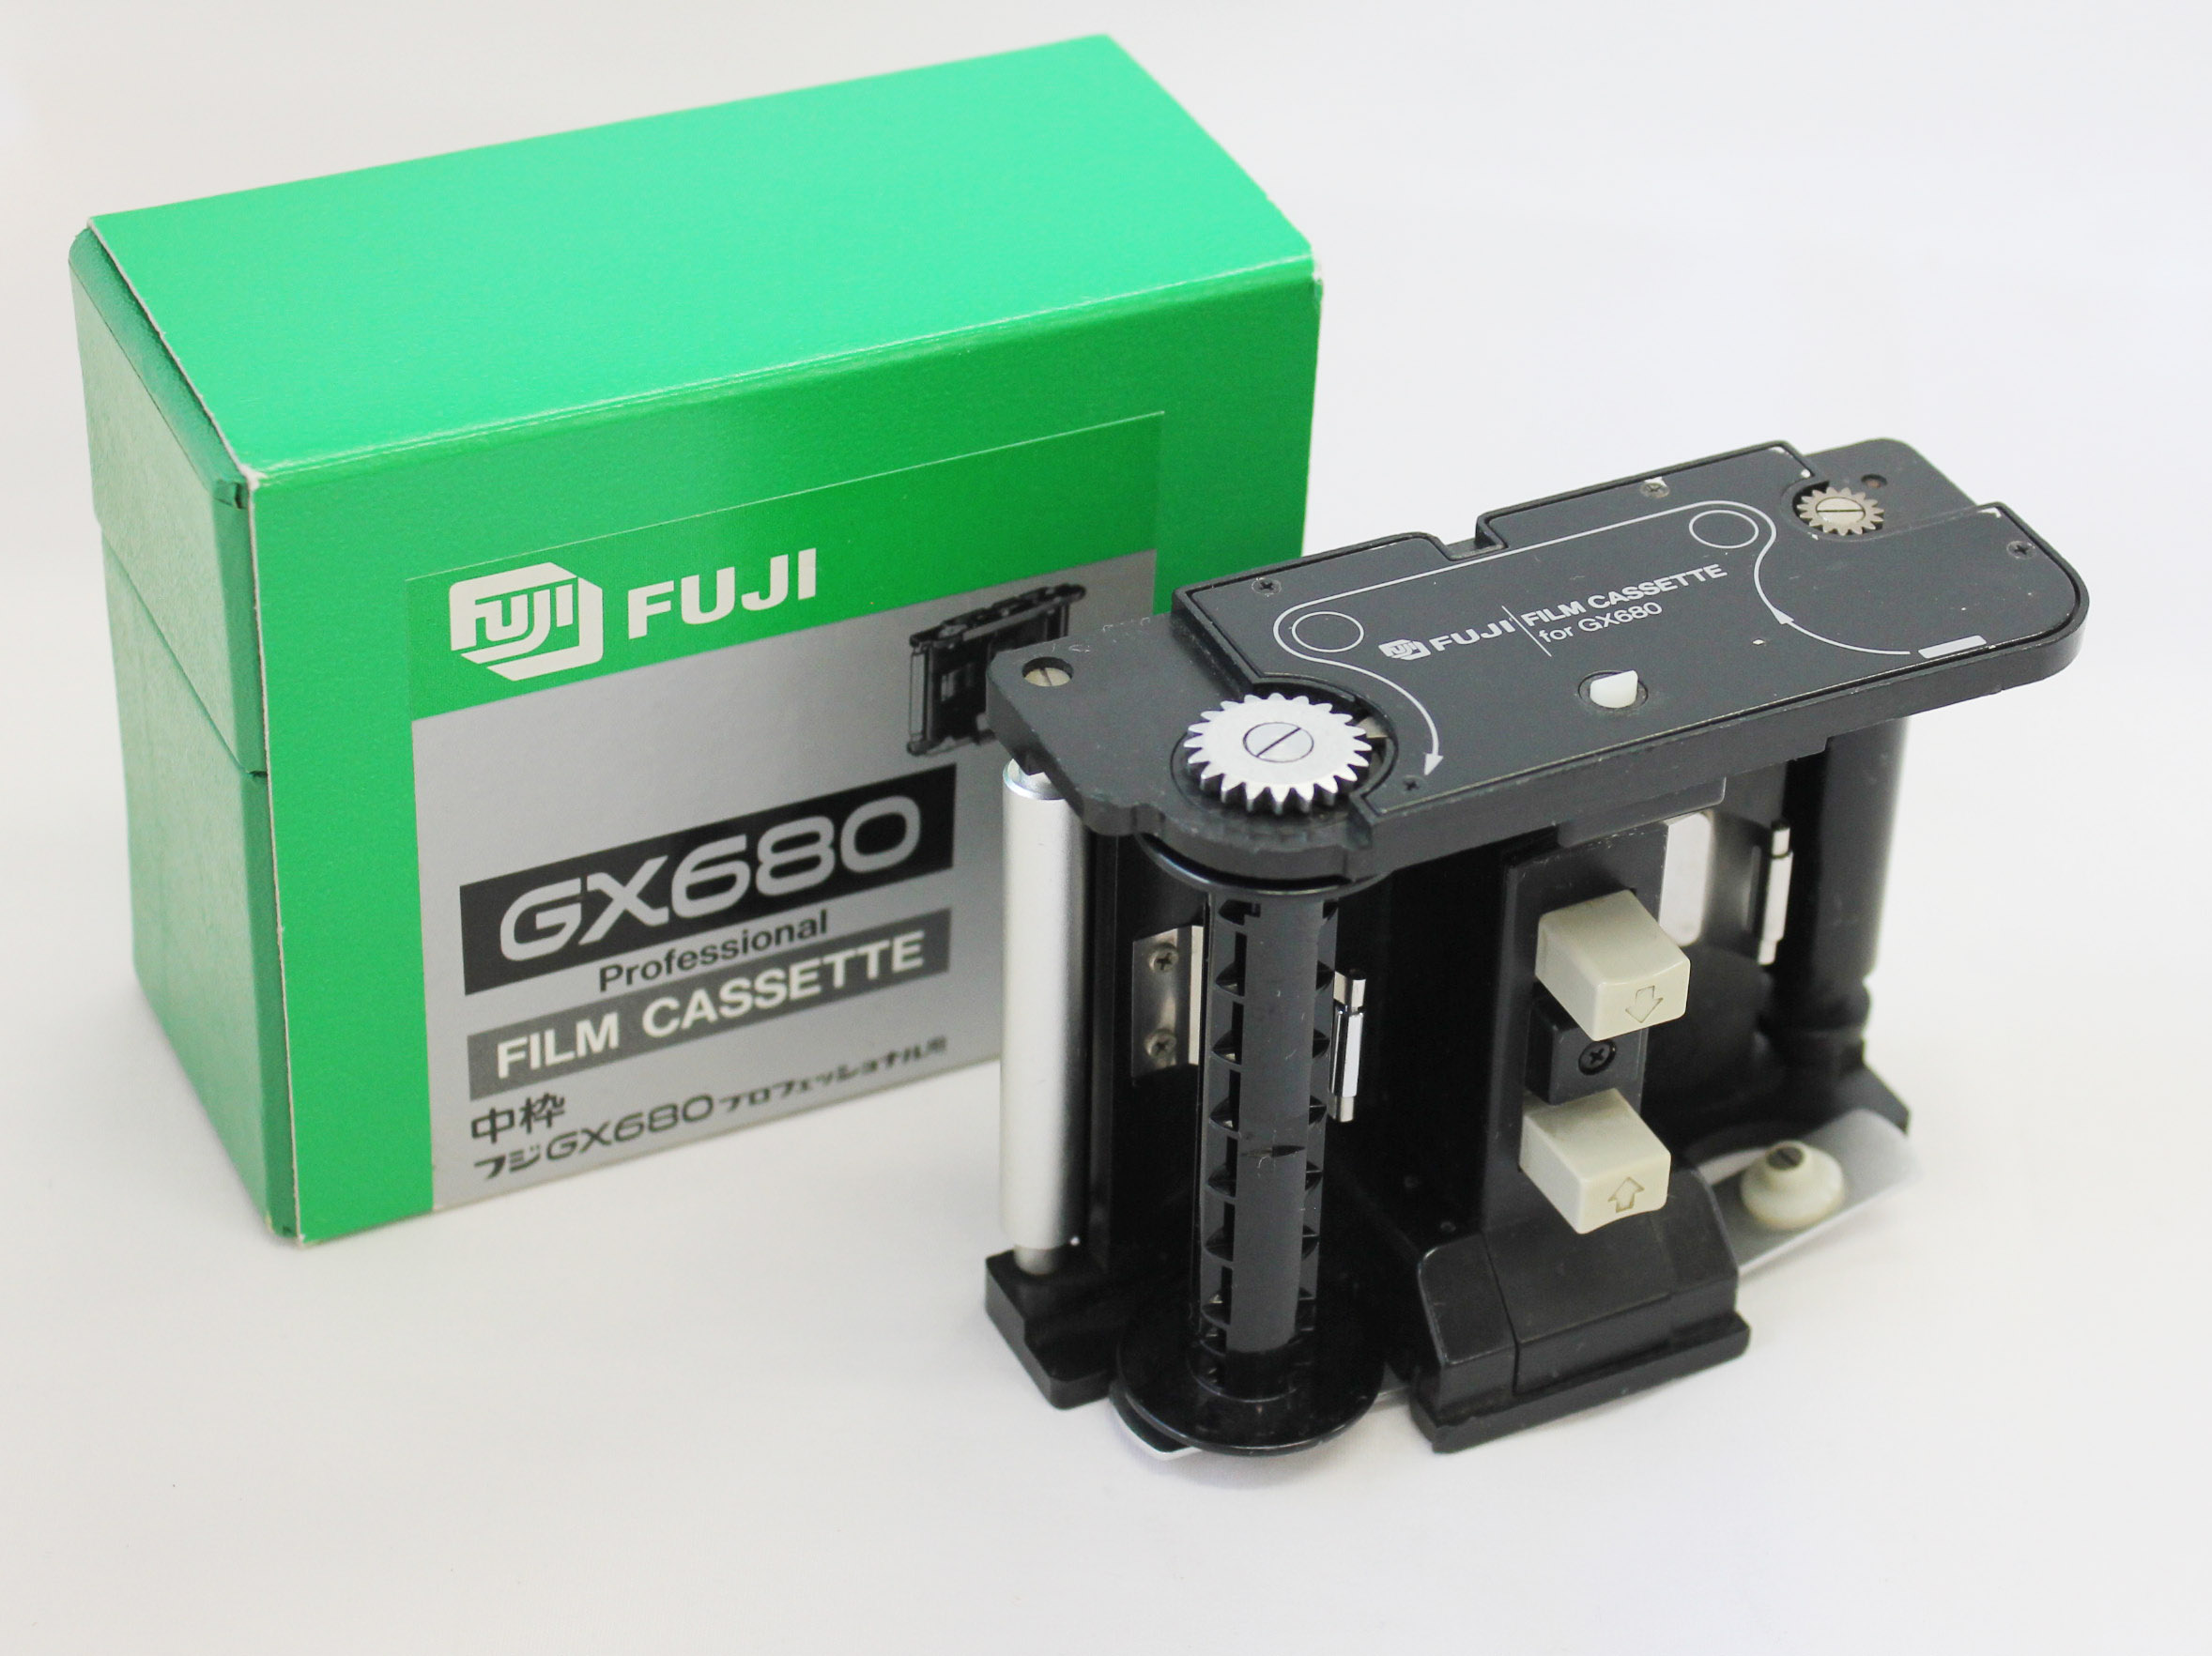 Fuji Fujifilm GX680 Professional Film Casette Insert in Box from Japan